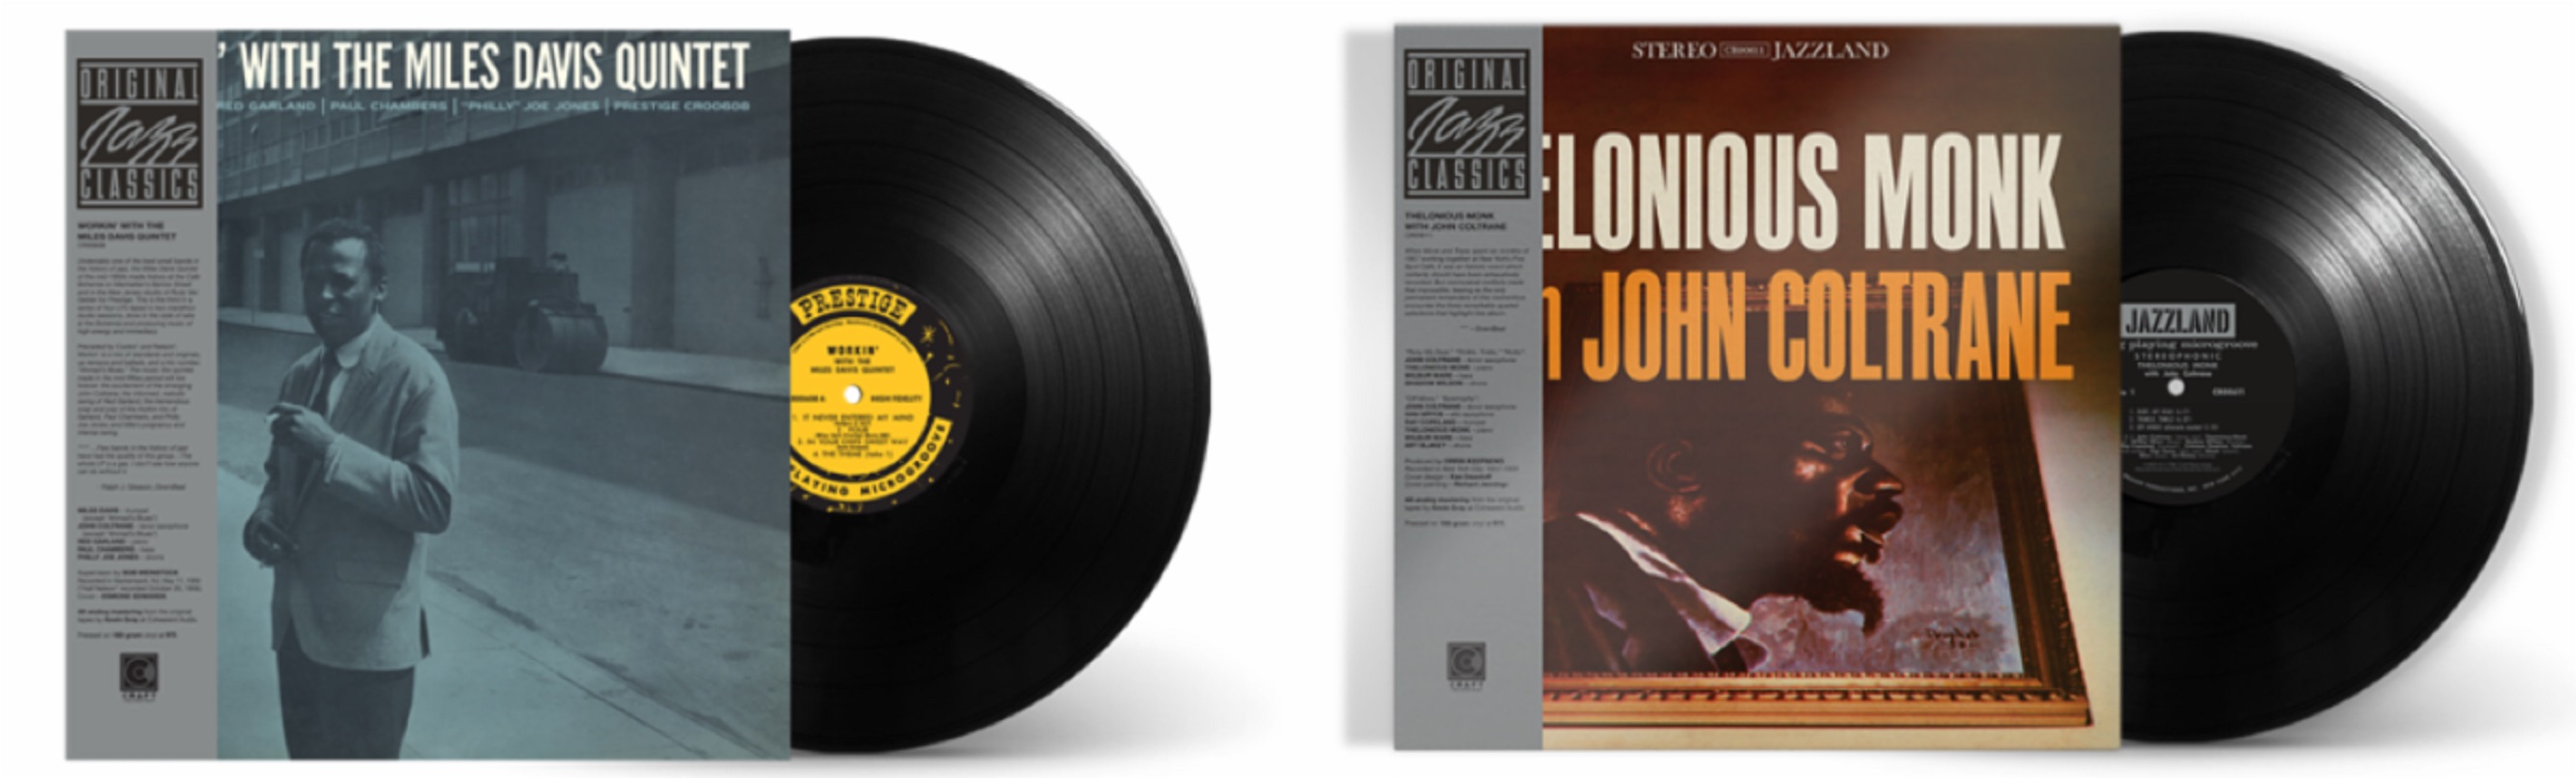 Craft Recordings relaunches acclaimed reissue series Original Jazz Classics